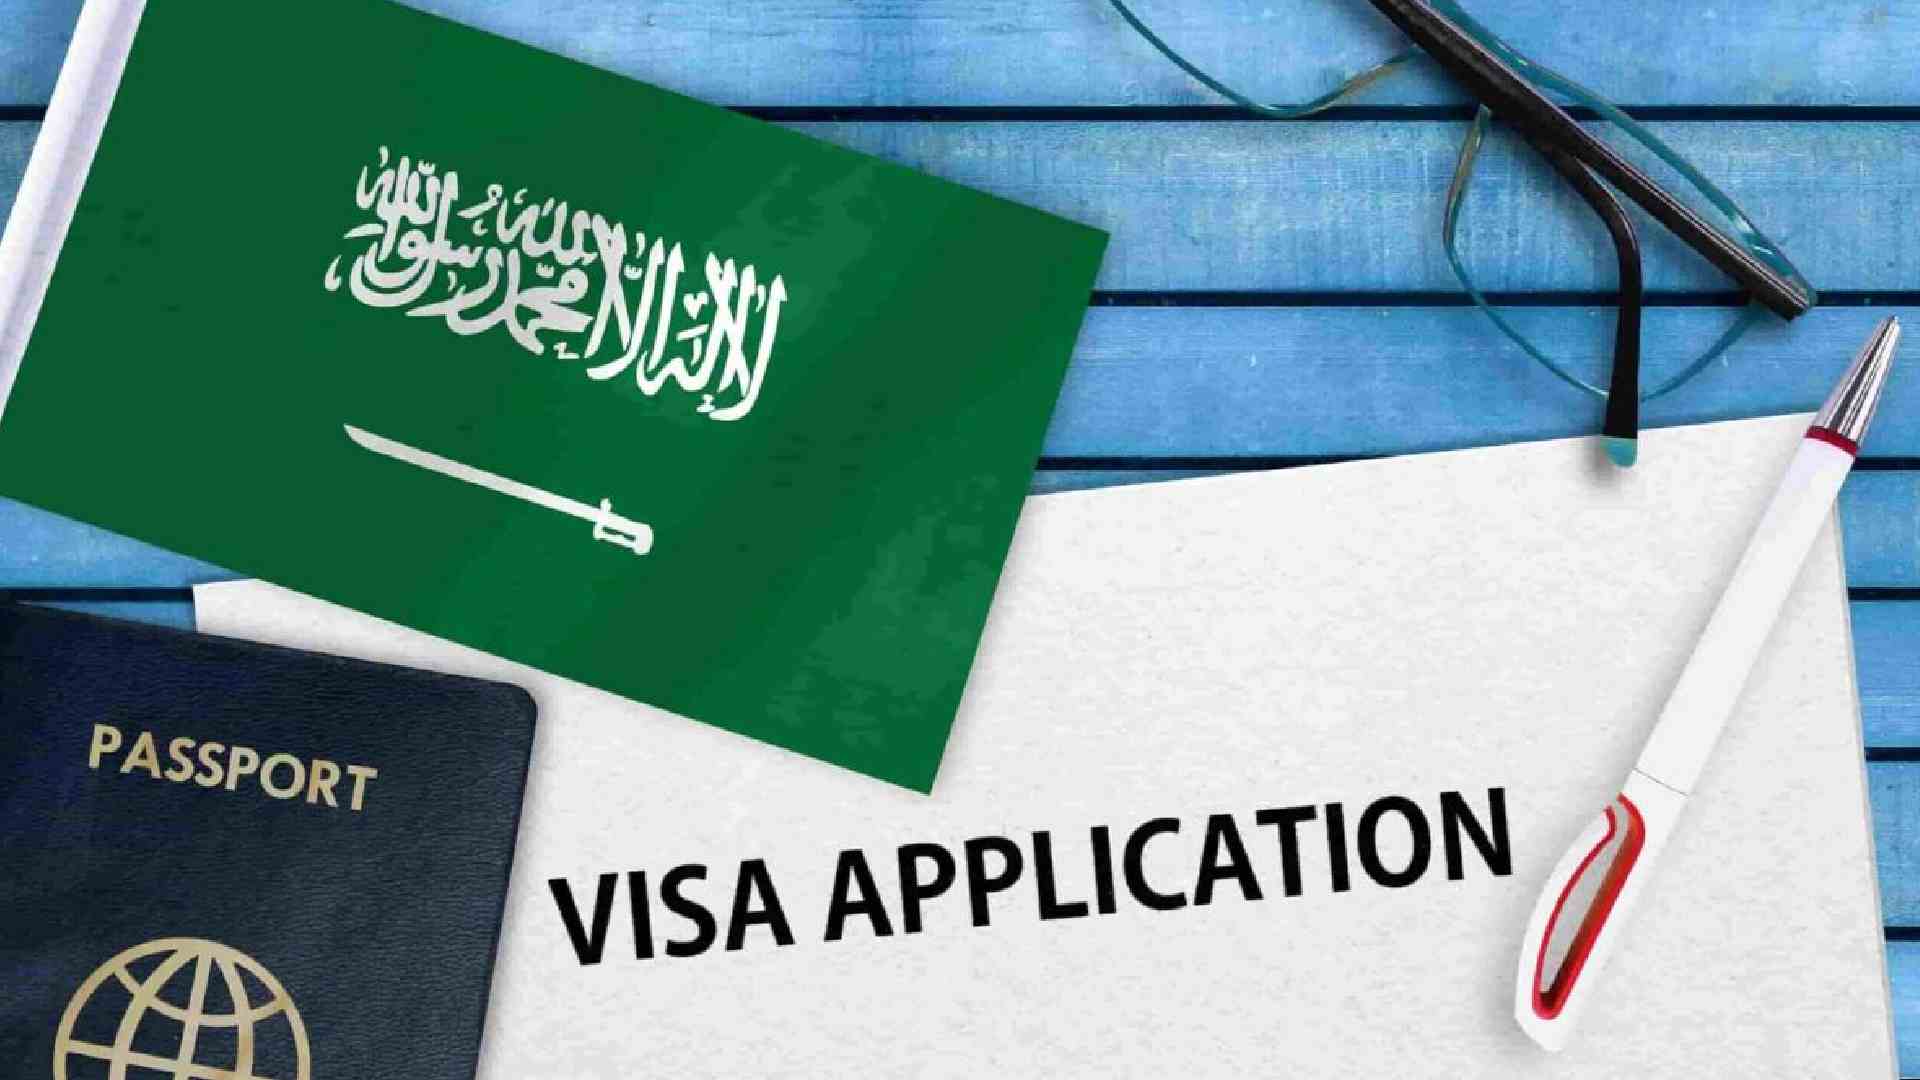 exit re-entry visa check